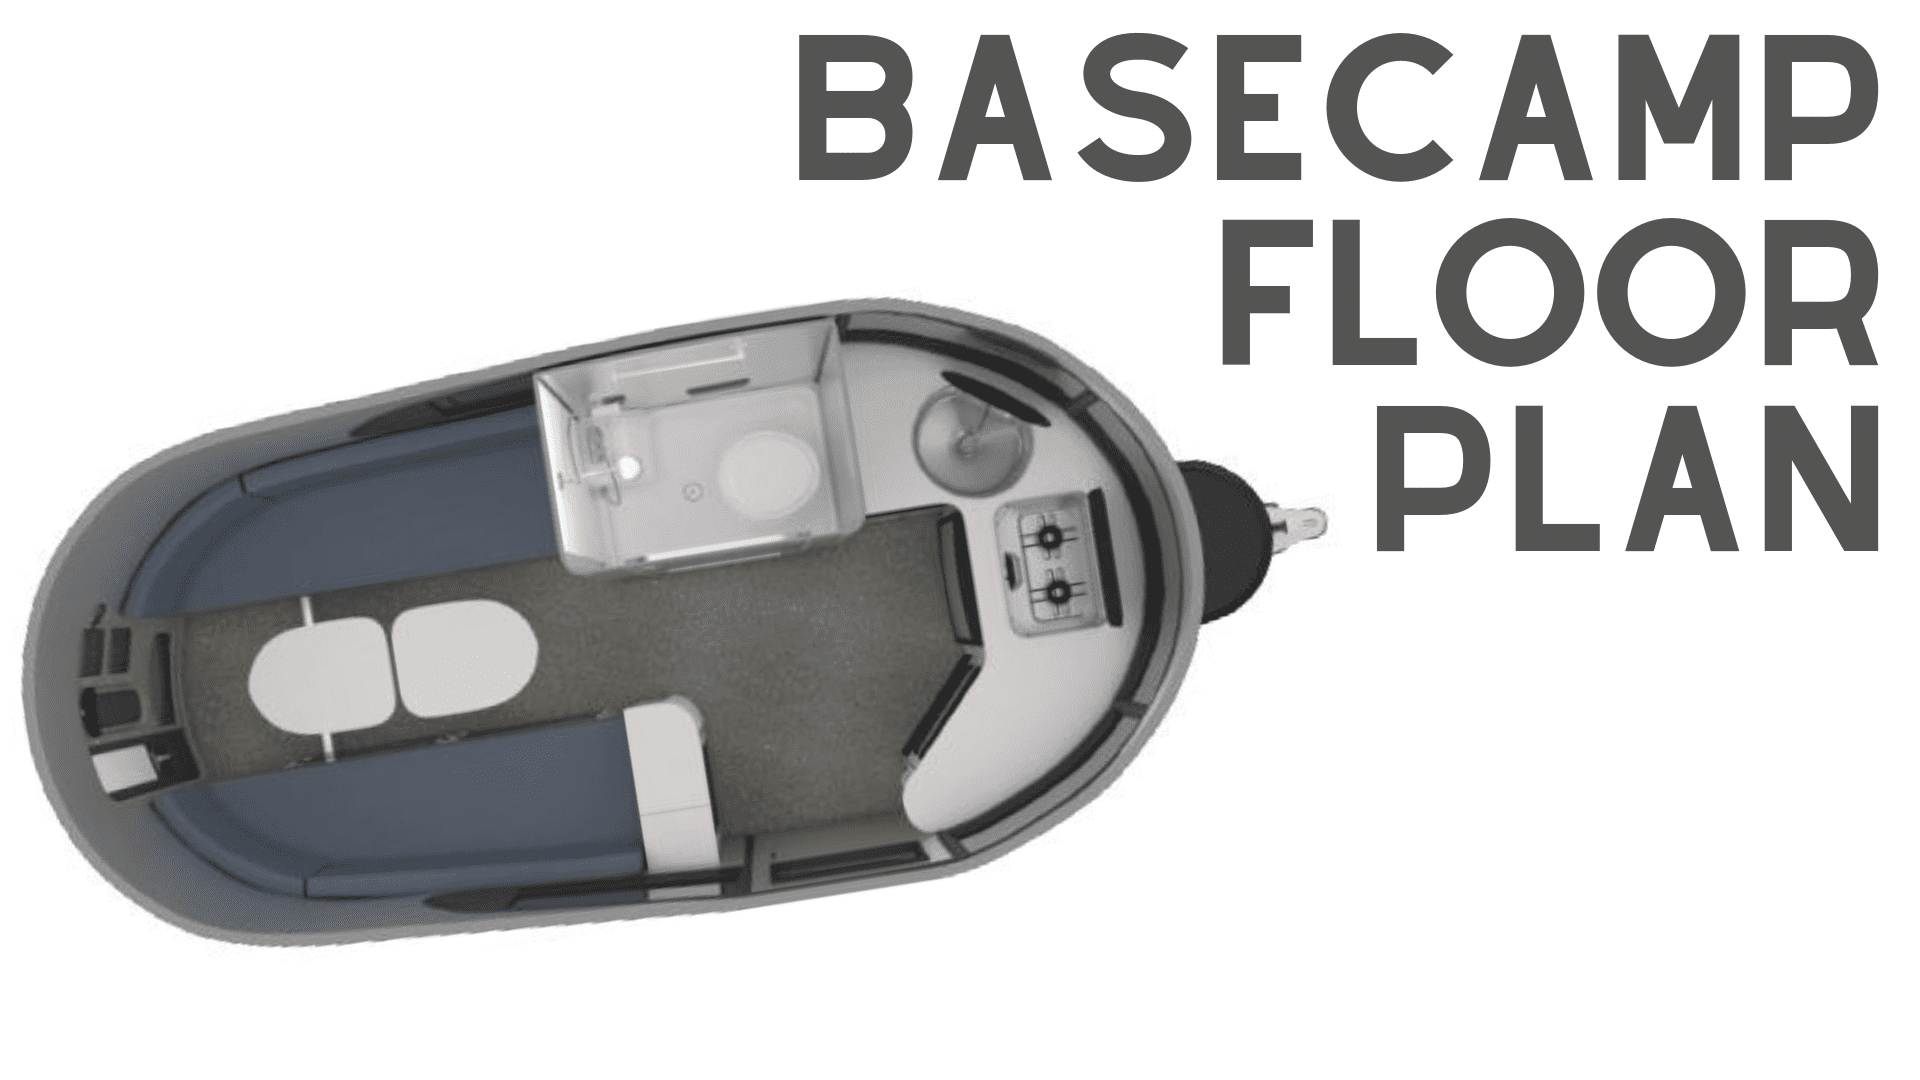 Basecamp Floor Plan